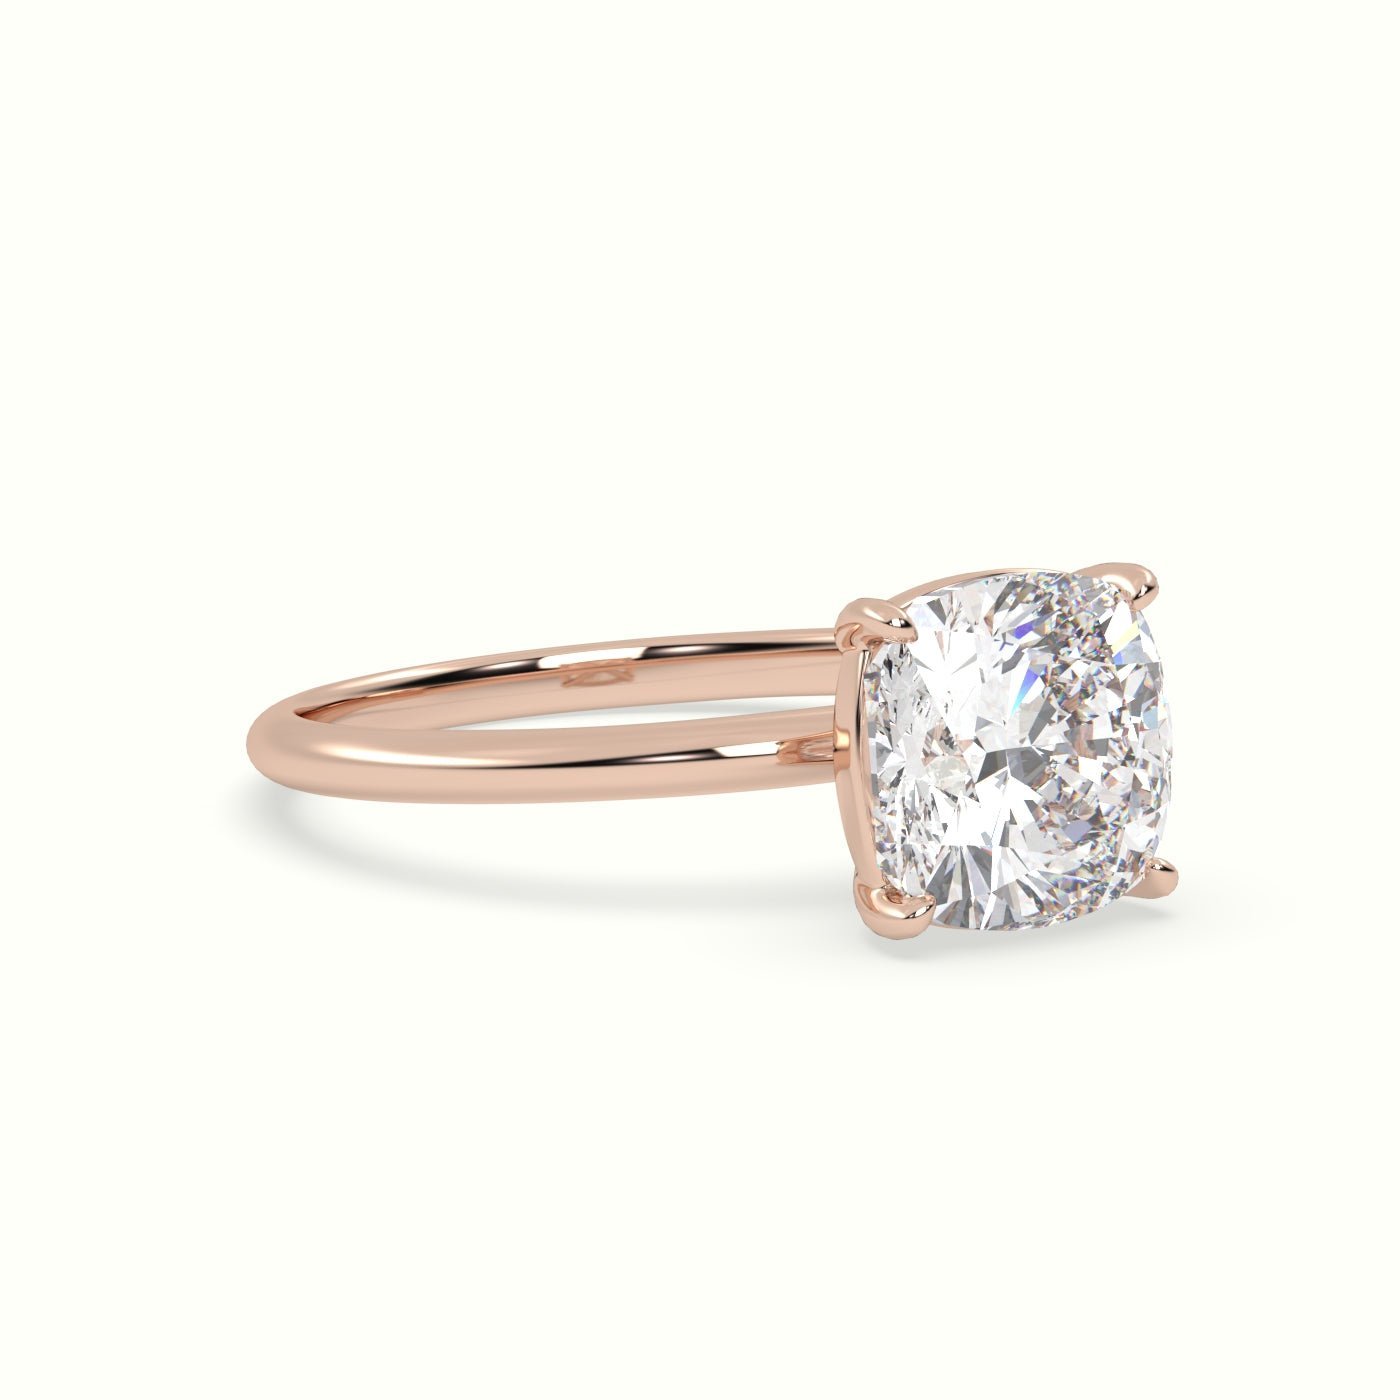 18k Gold Cushion Cut Solitaire Engagement Ring - shemesh_diamonds